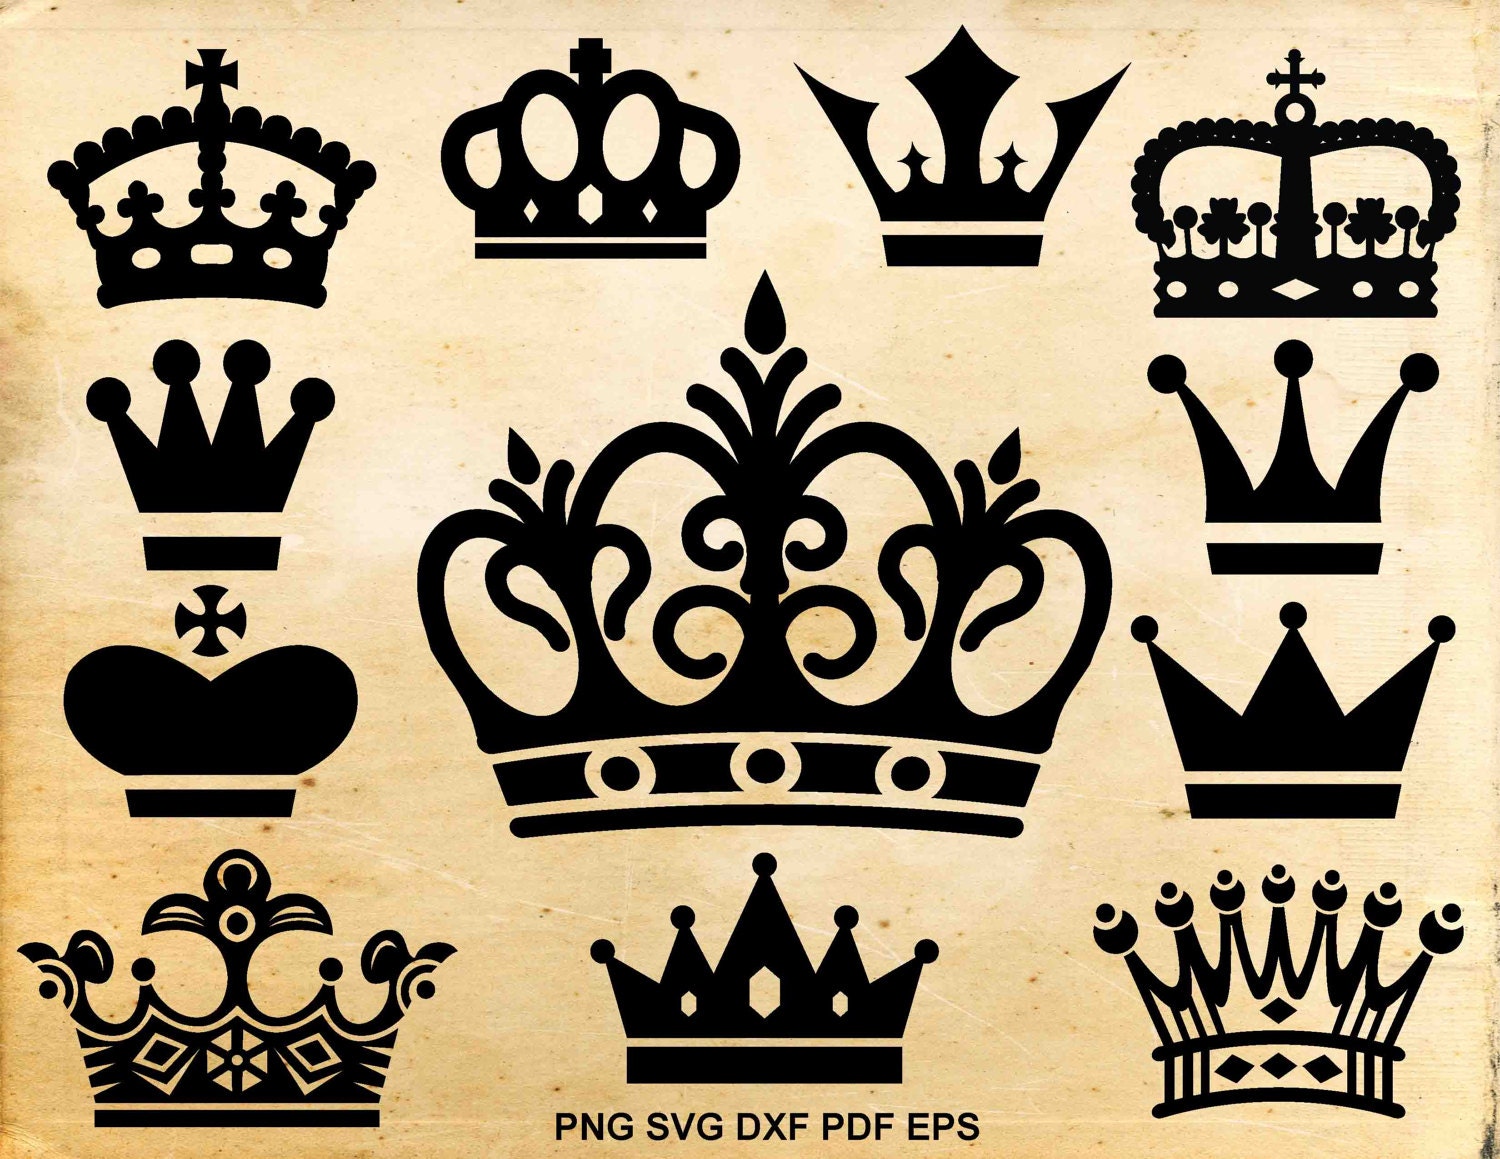 Download Crown svg file Crown clipart Queen crown King crown Cut